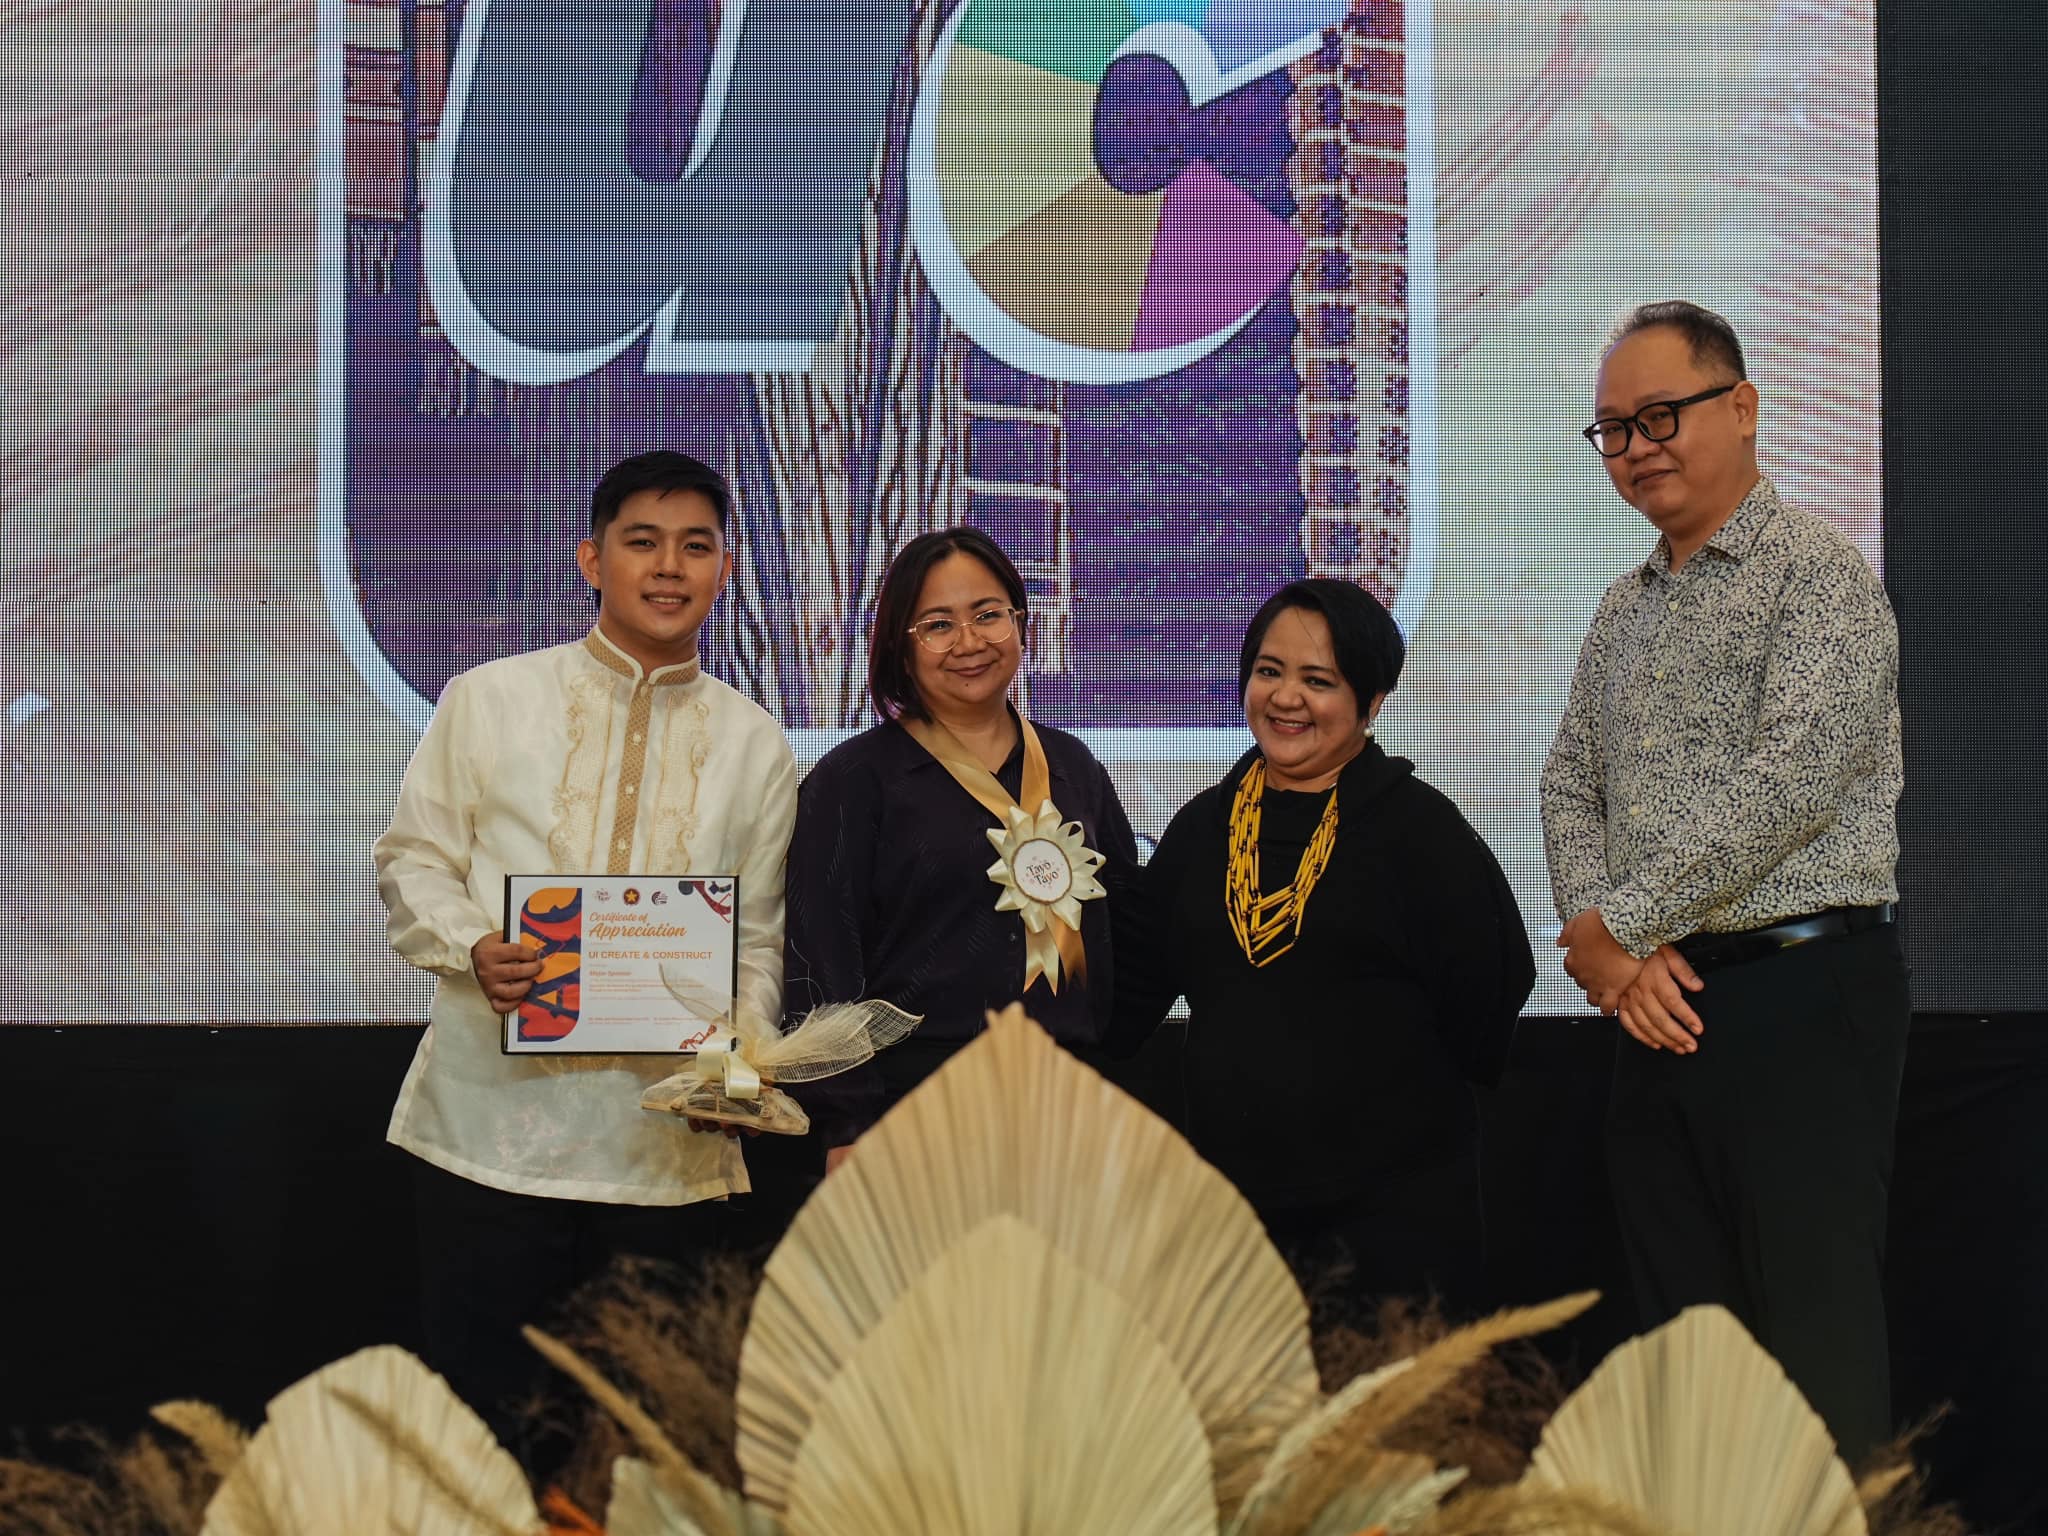 UIC x PUP BSID Tayo-Tayo: A collaboration showcasing Filipino culture and craftsmanship